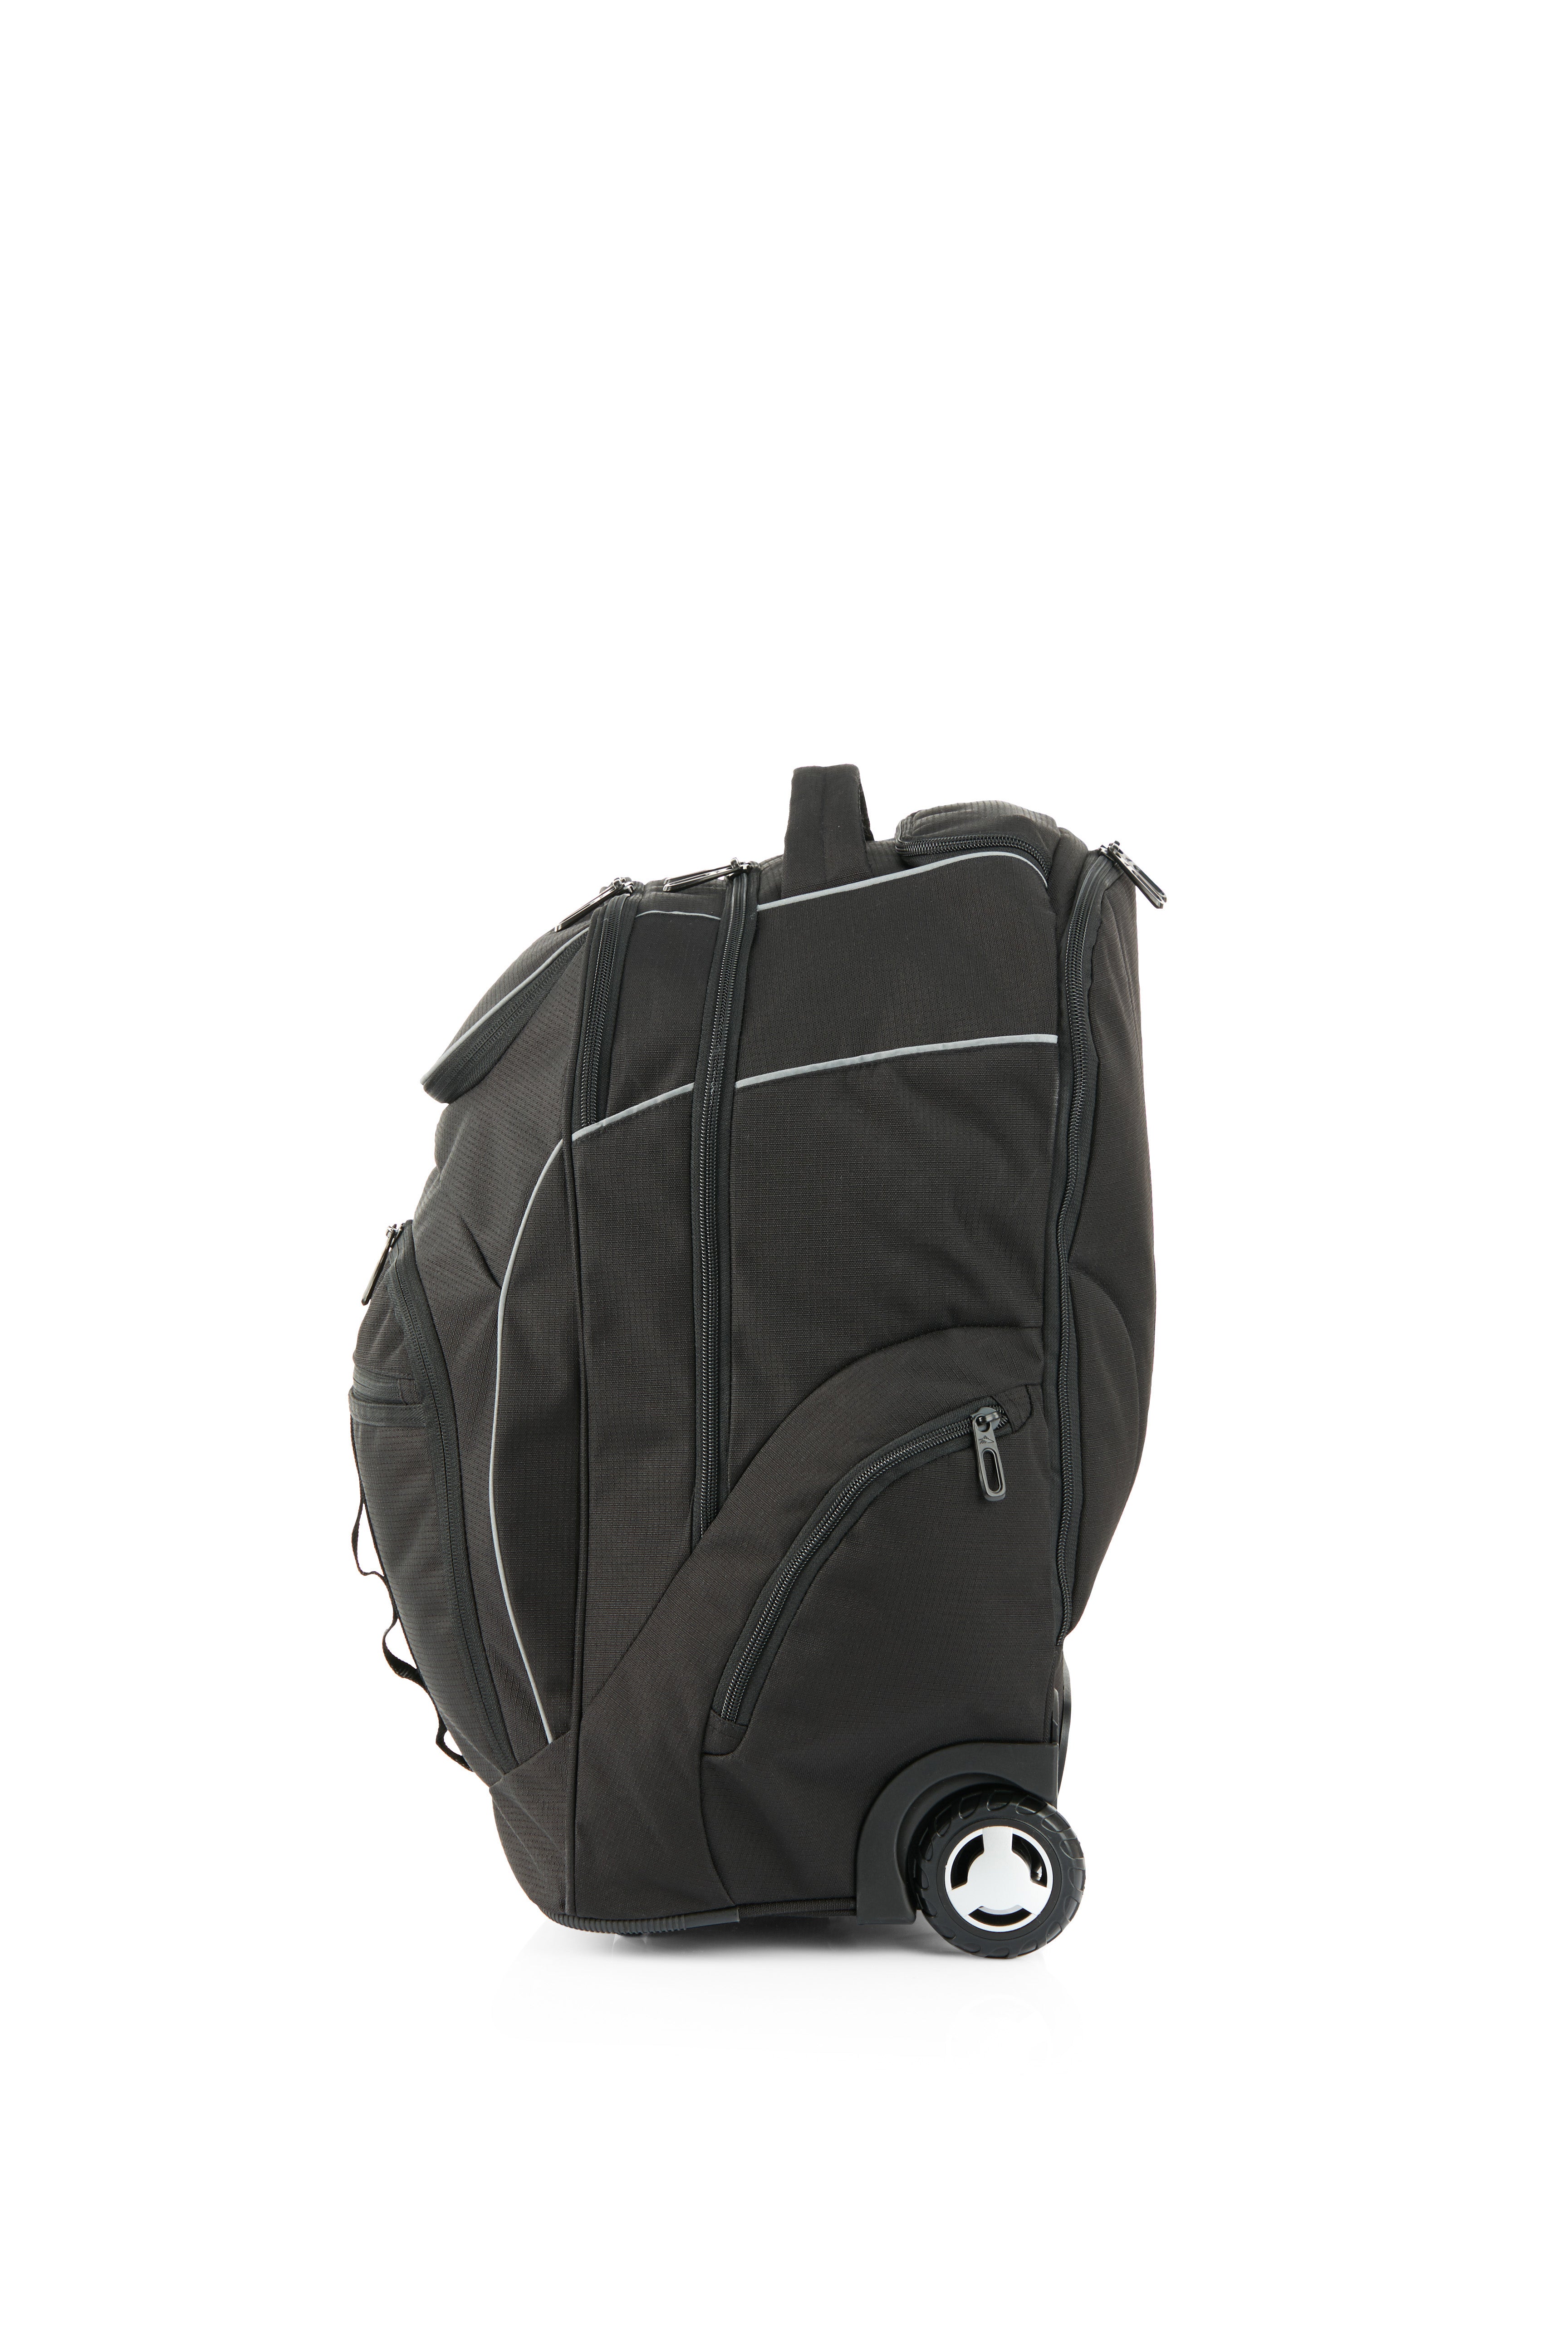 High Sierra - Access 3.0 Eco Pro Wheeled backpack - Black-4